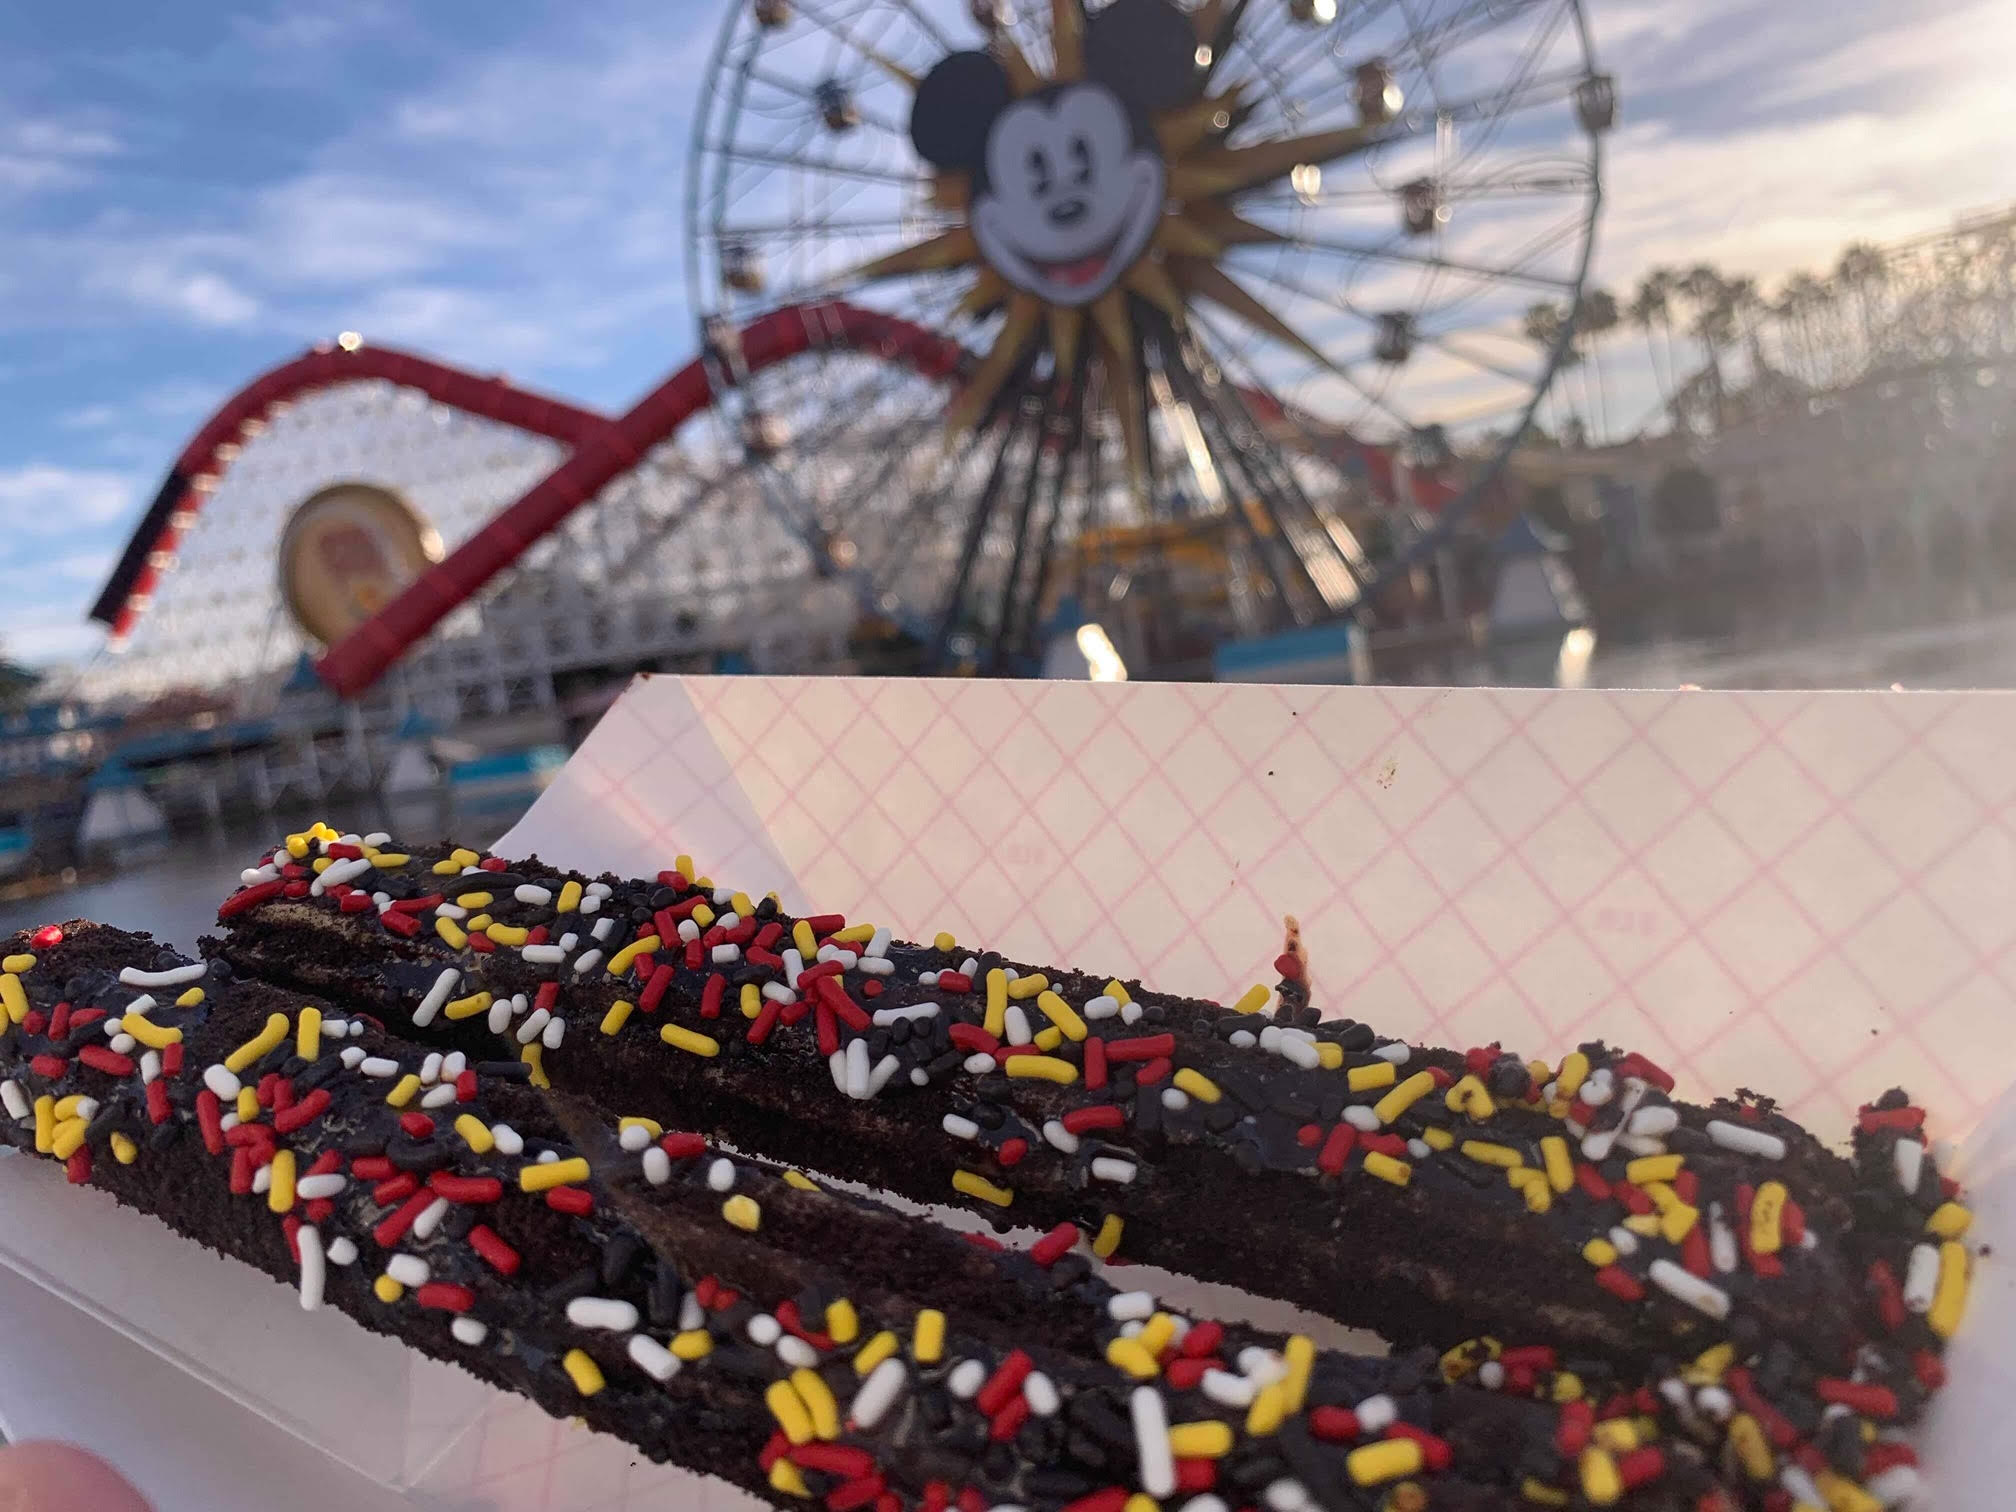 Chow Down on Disneyland’s New Chocolate Churro